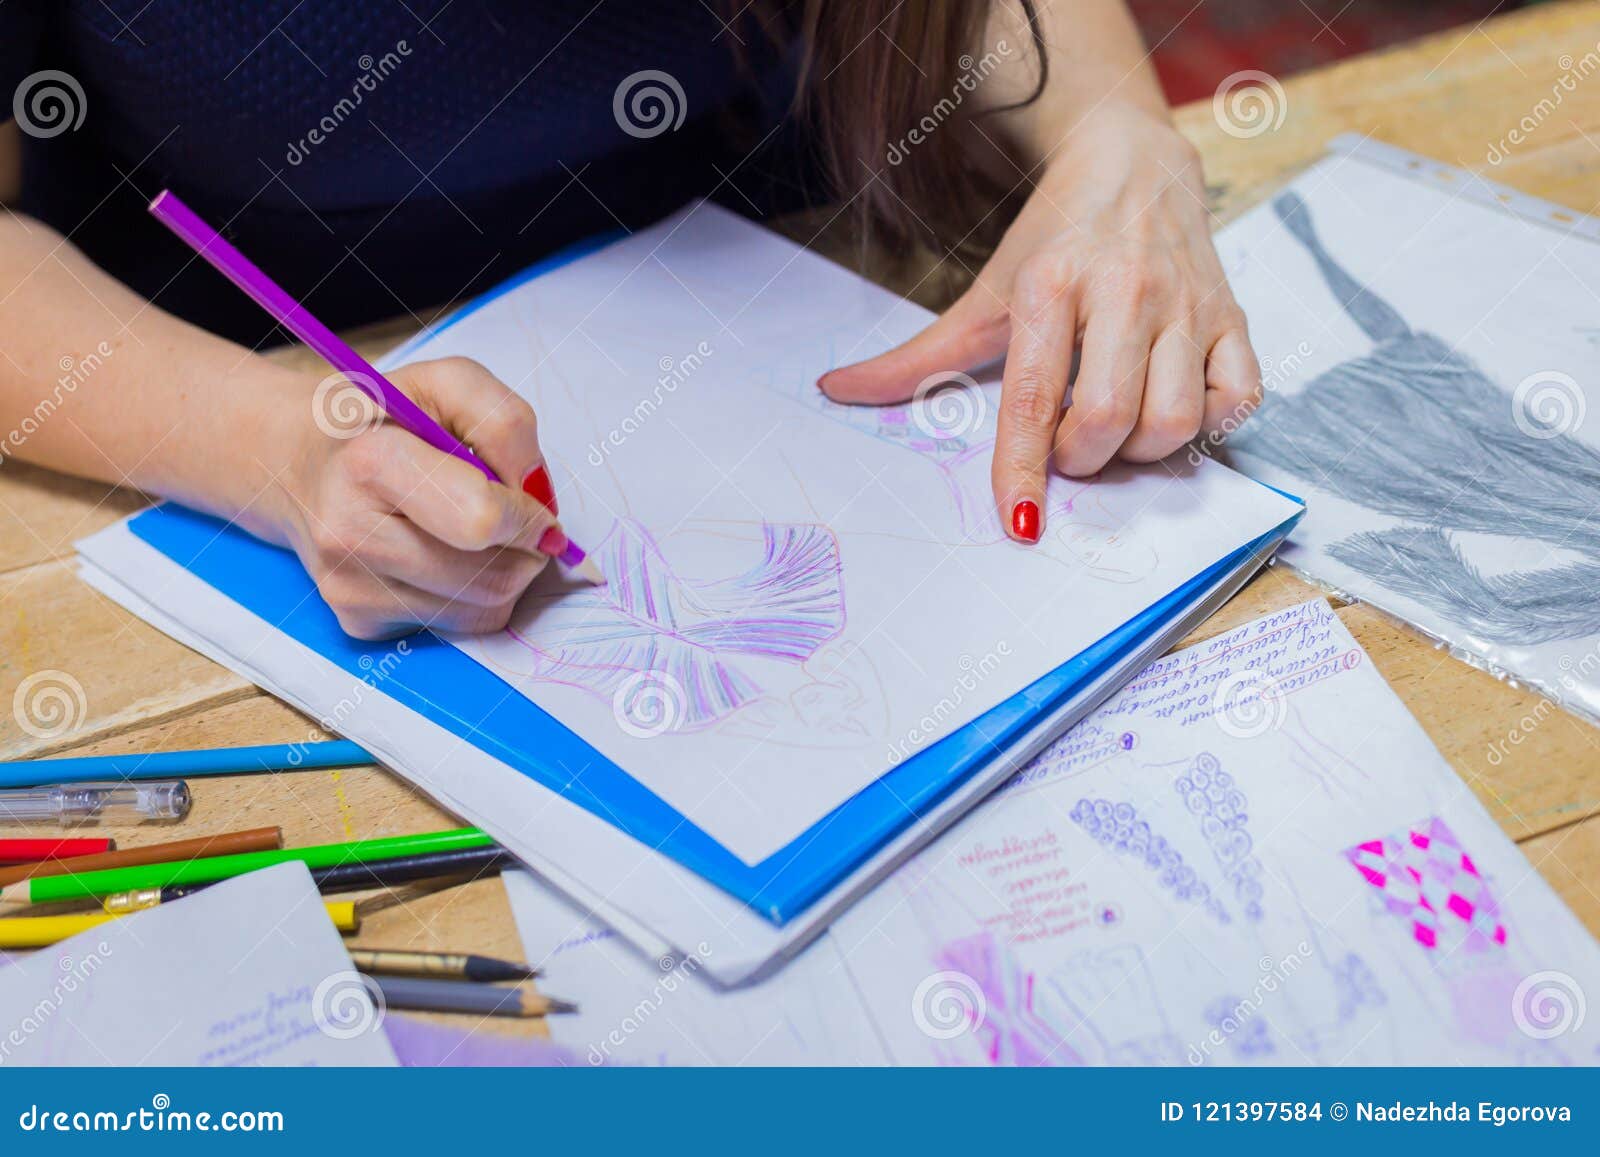 Fashion Designer Drawing Design Sketch Stock Photo - Image of ...